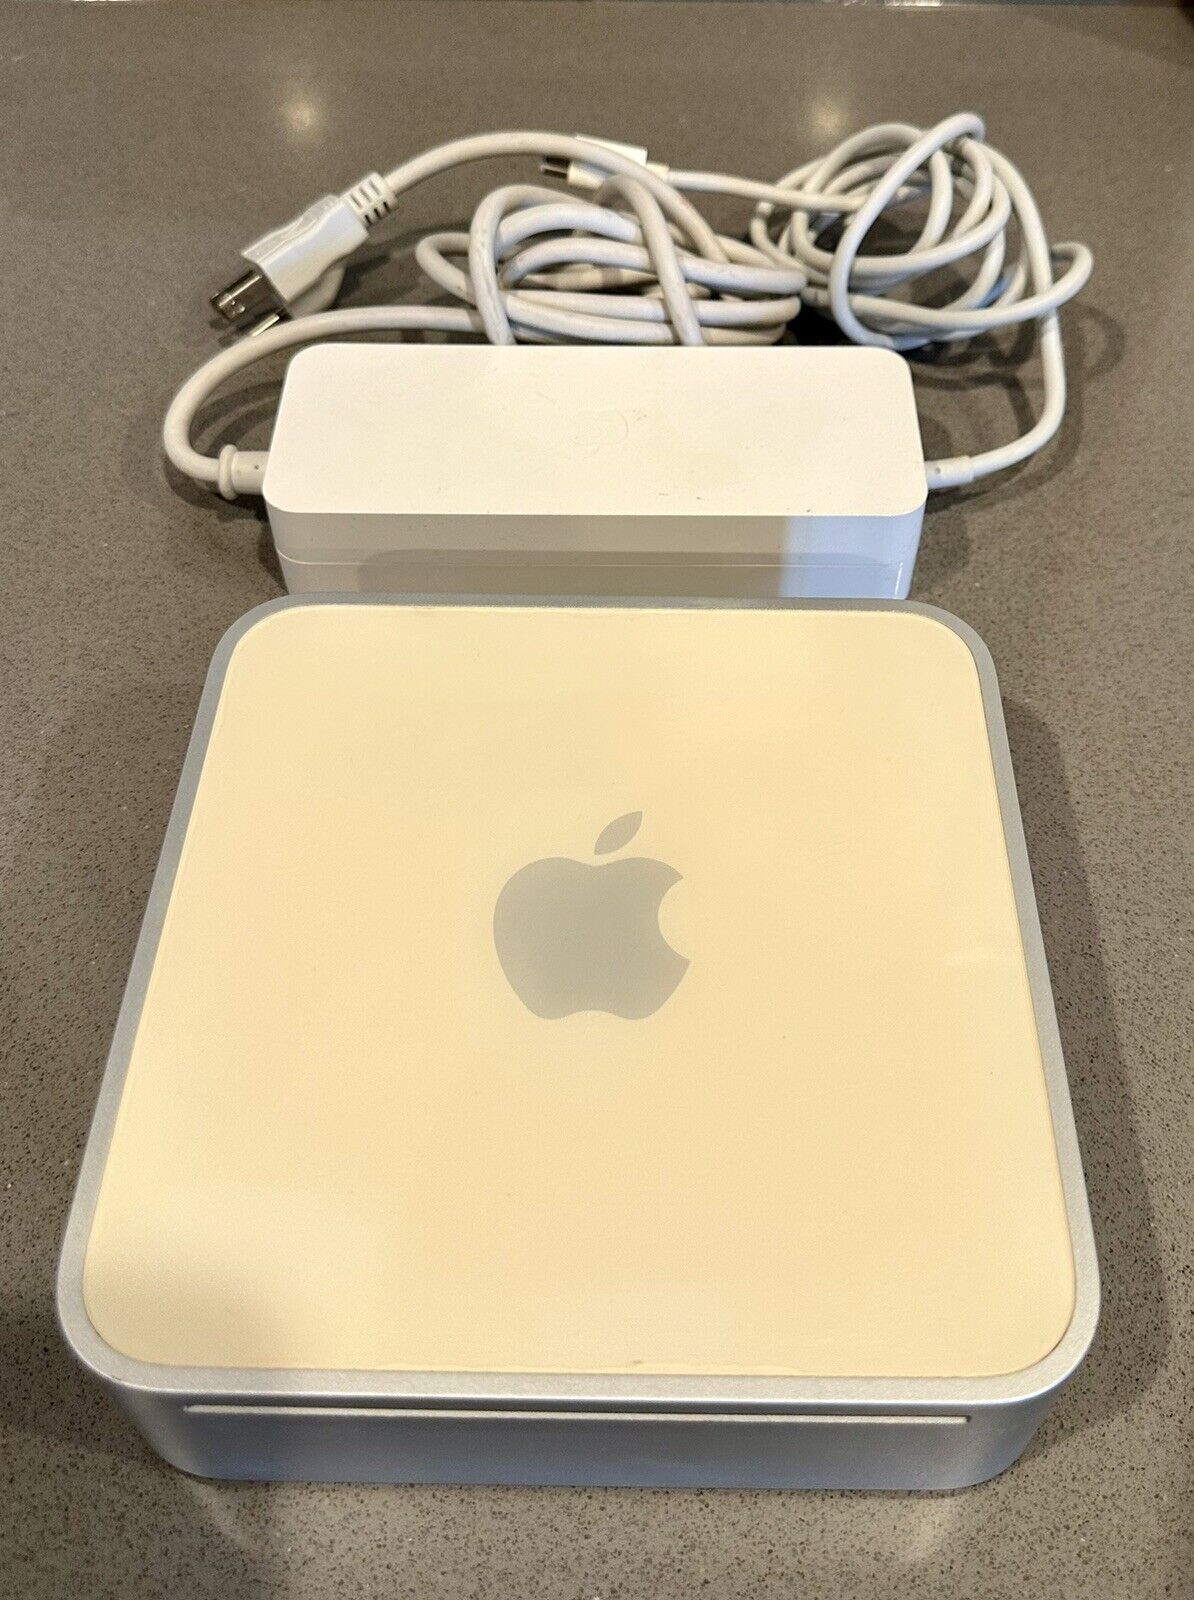 Apple Mac Mini G4 A1103 1.25GHZ 1GB RAM 40GB HD with Power Adapter and Mac OS X